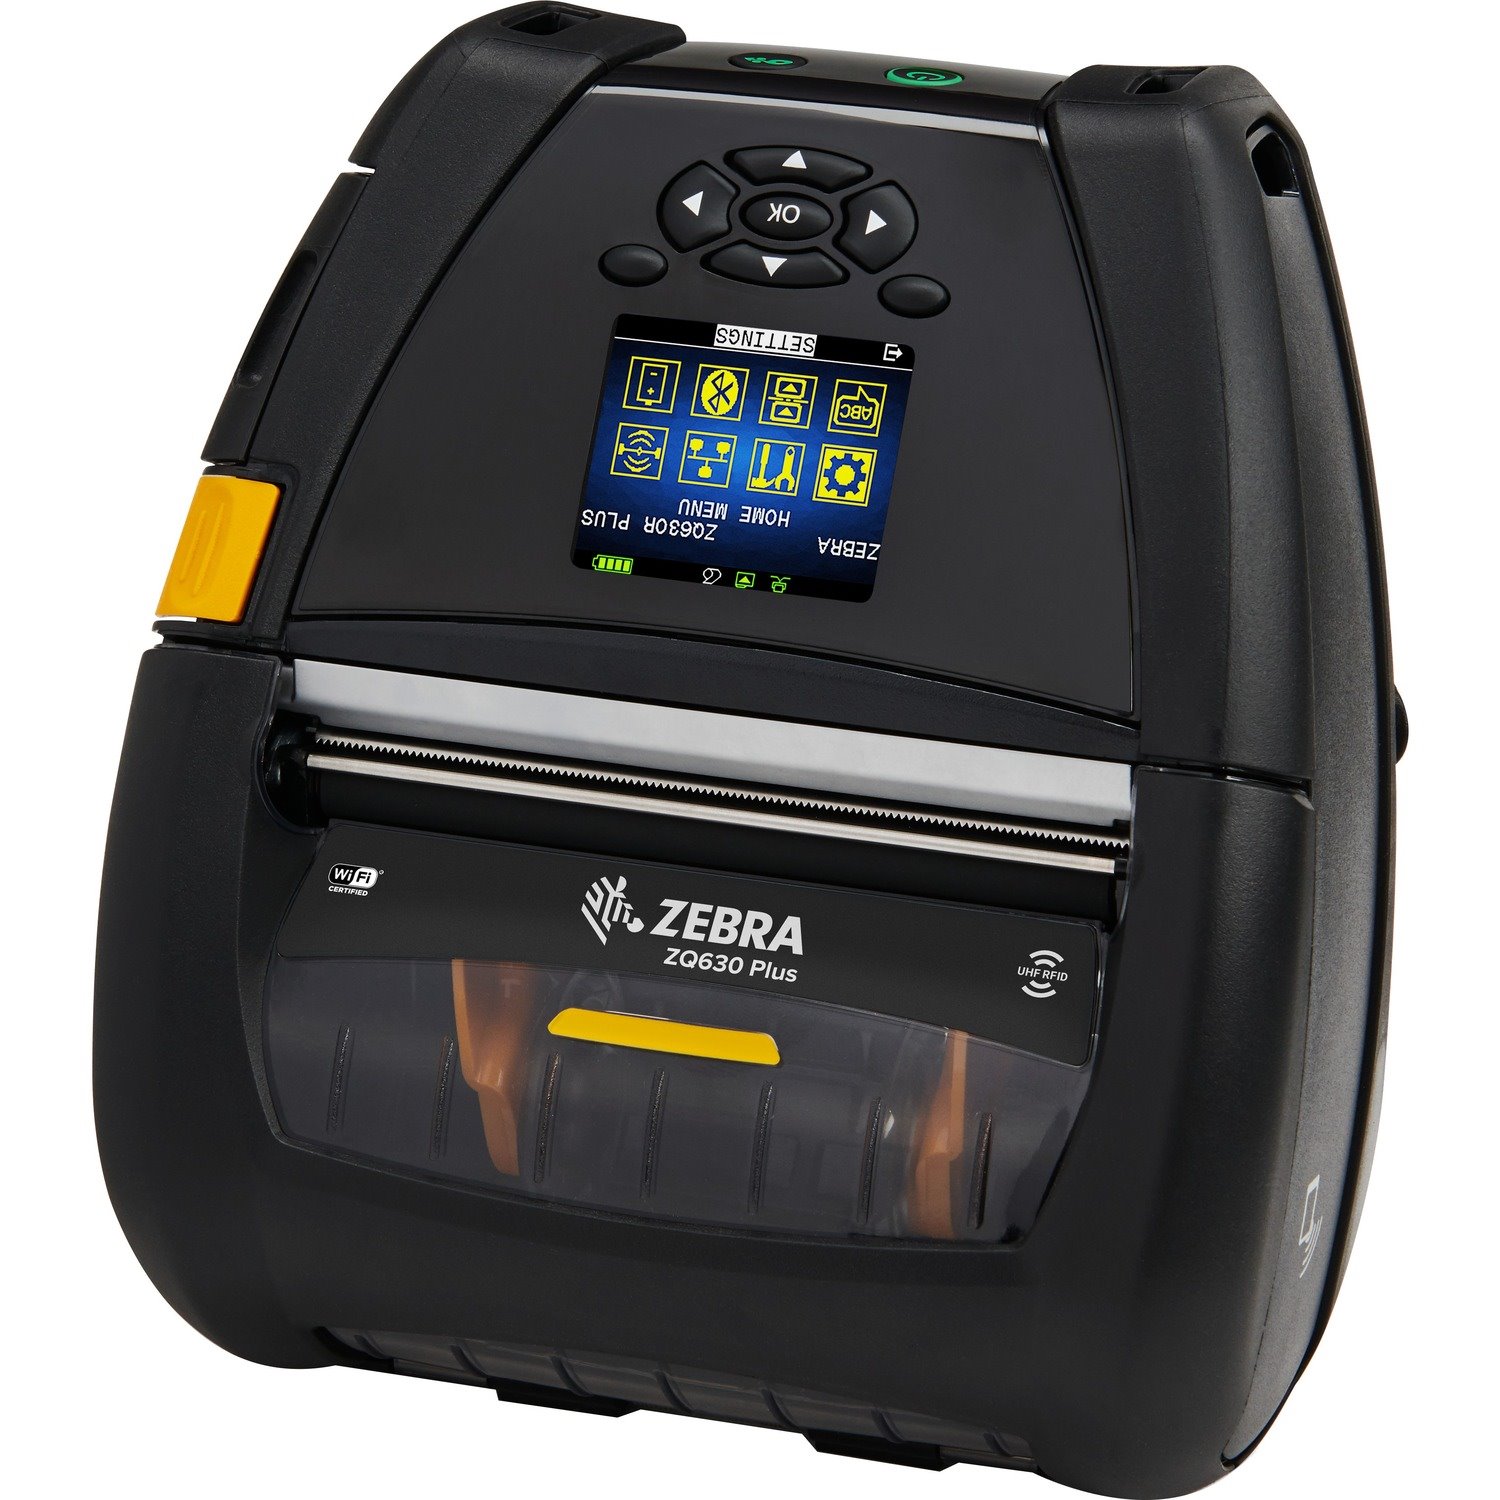 Zebra ZQ630 Plus Desktop, Industrial, Mobile Direct Thermal Printer - Monochrome - Label/Receipt Print - Bluetooth - Wireless LAN - Near Field Communication (NFC) - RFID